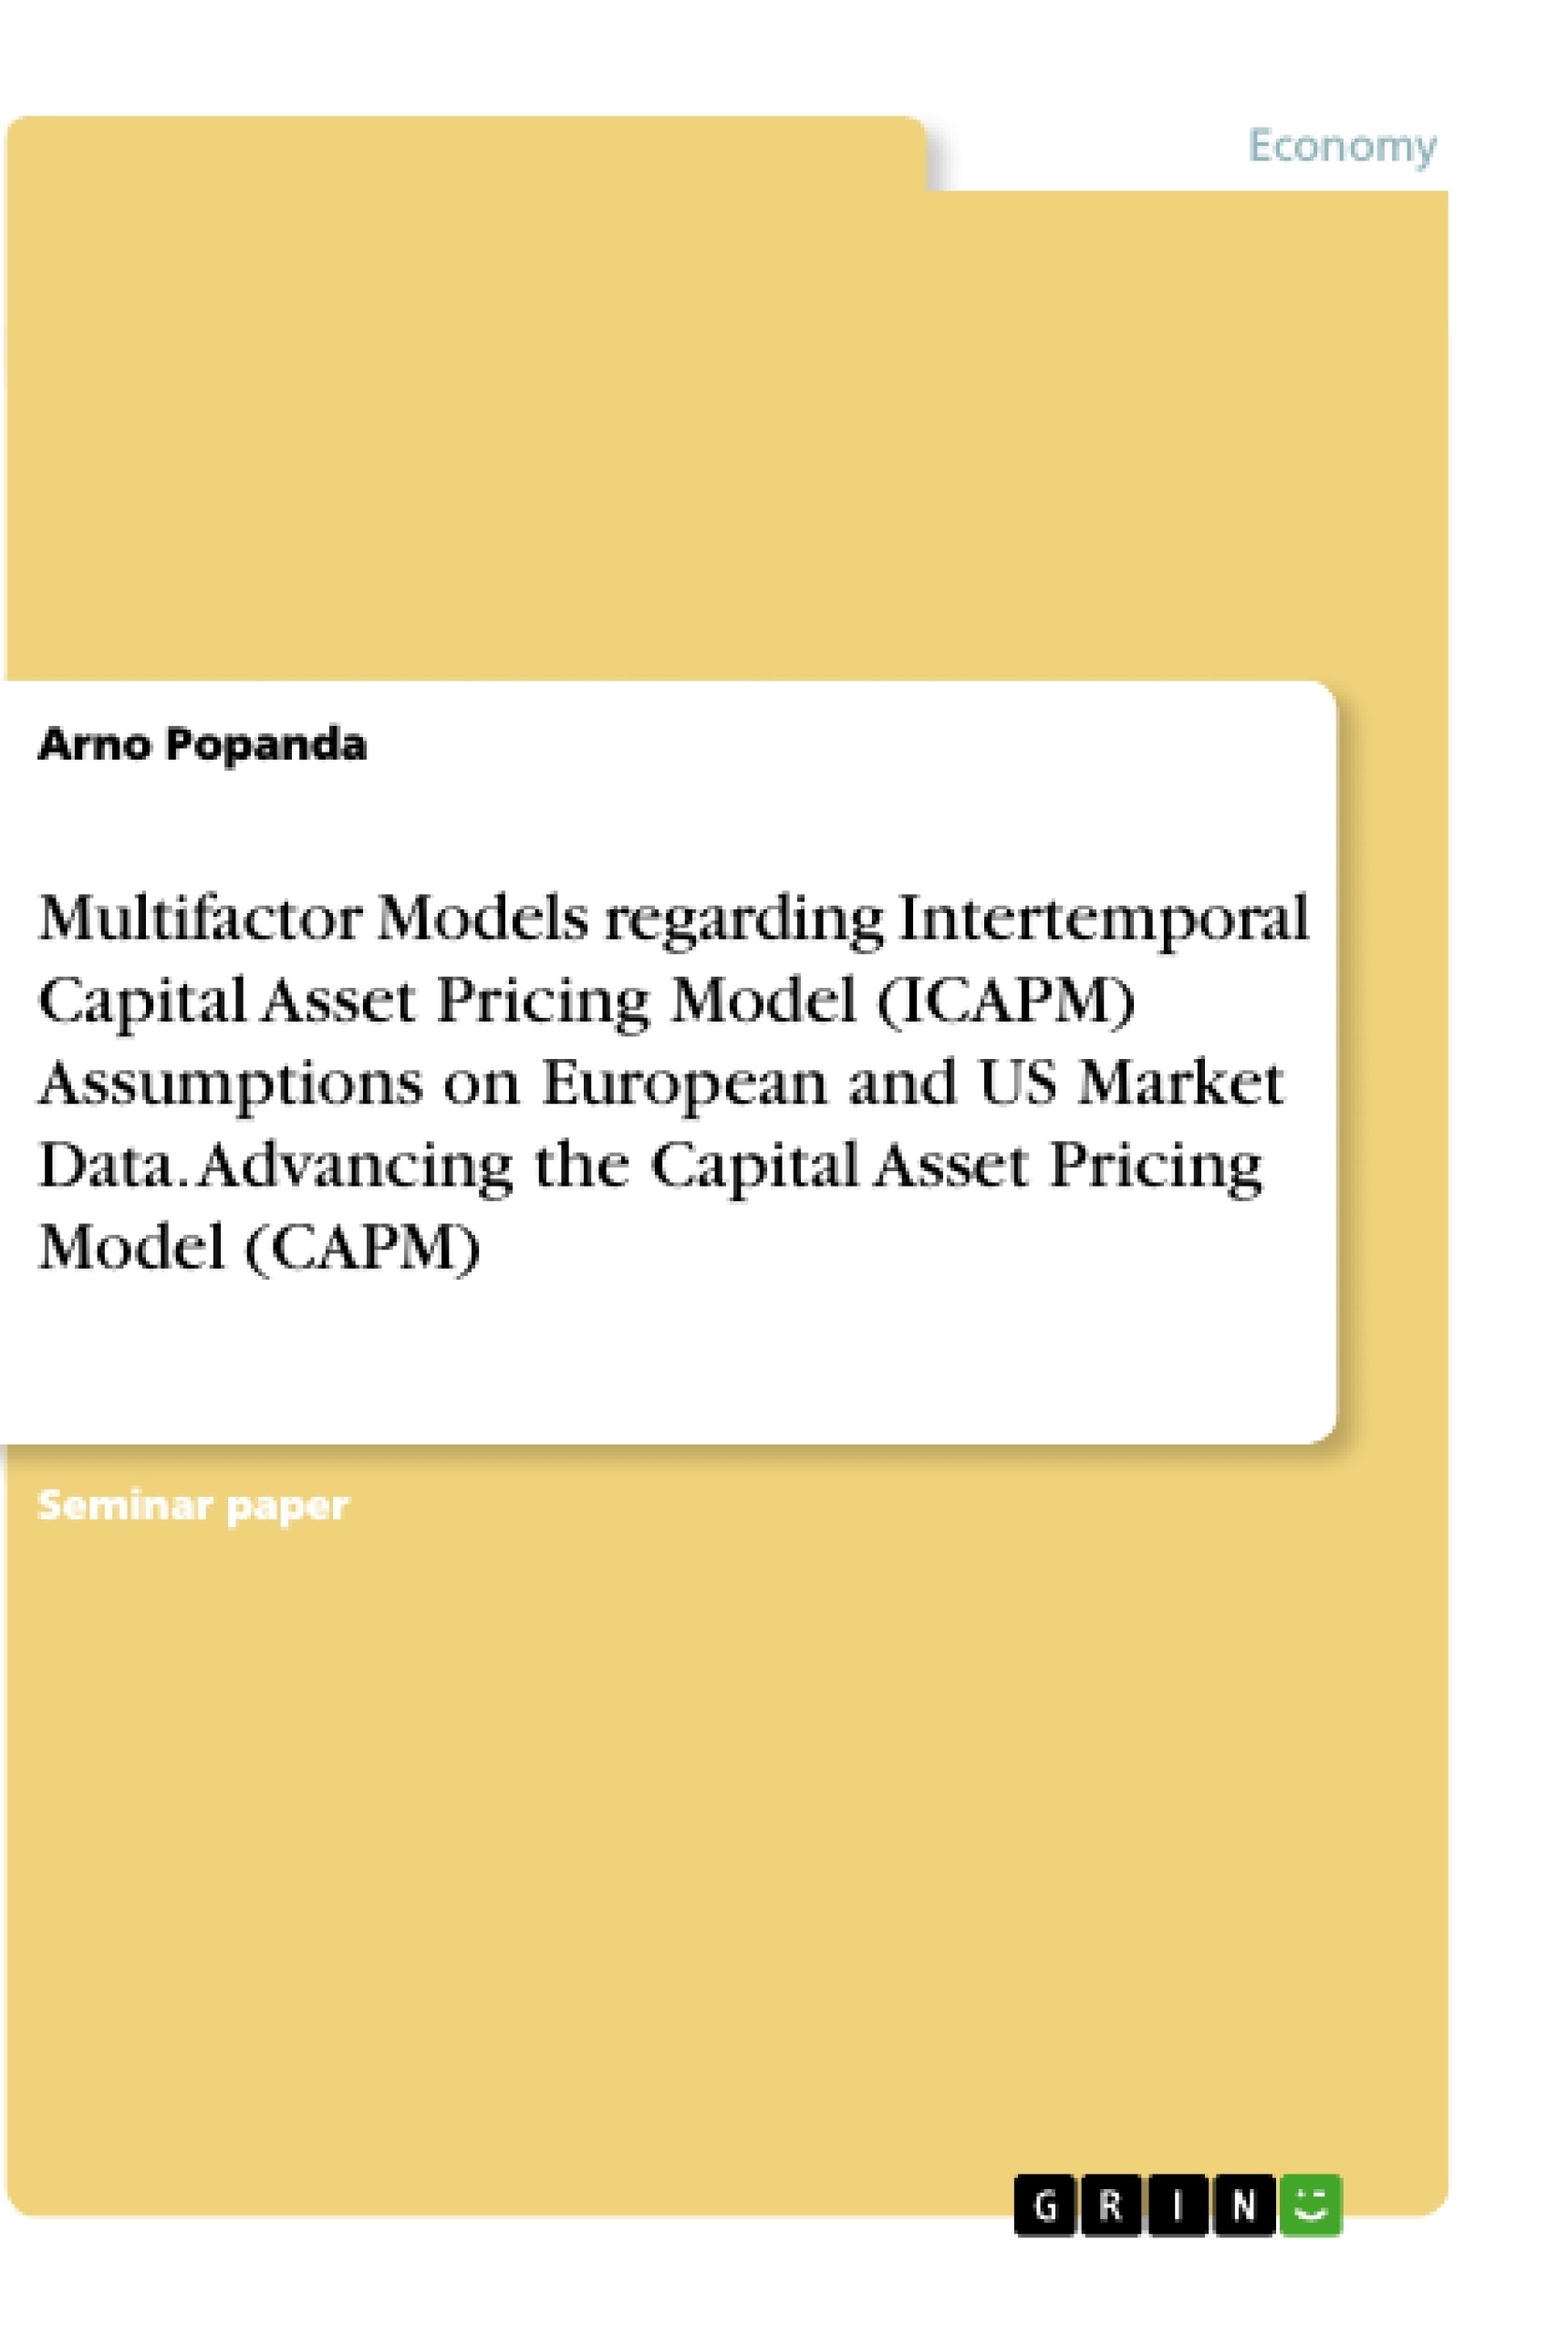 Title: Multifactor Models regarding Intertemporal Capital Asset Pricing Model (ICAPM) Assumptions on European and US Market Data. Advancing the Capital Asset Pricing Model (CAPM)